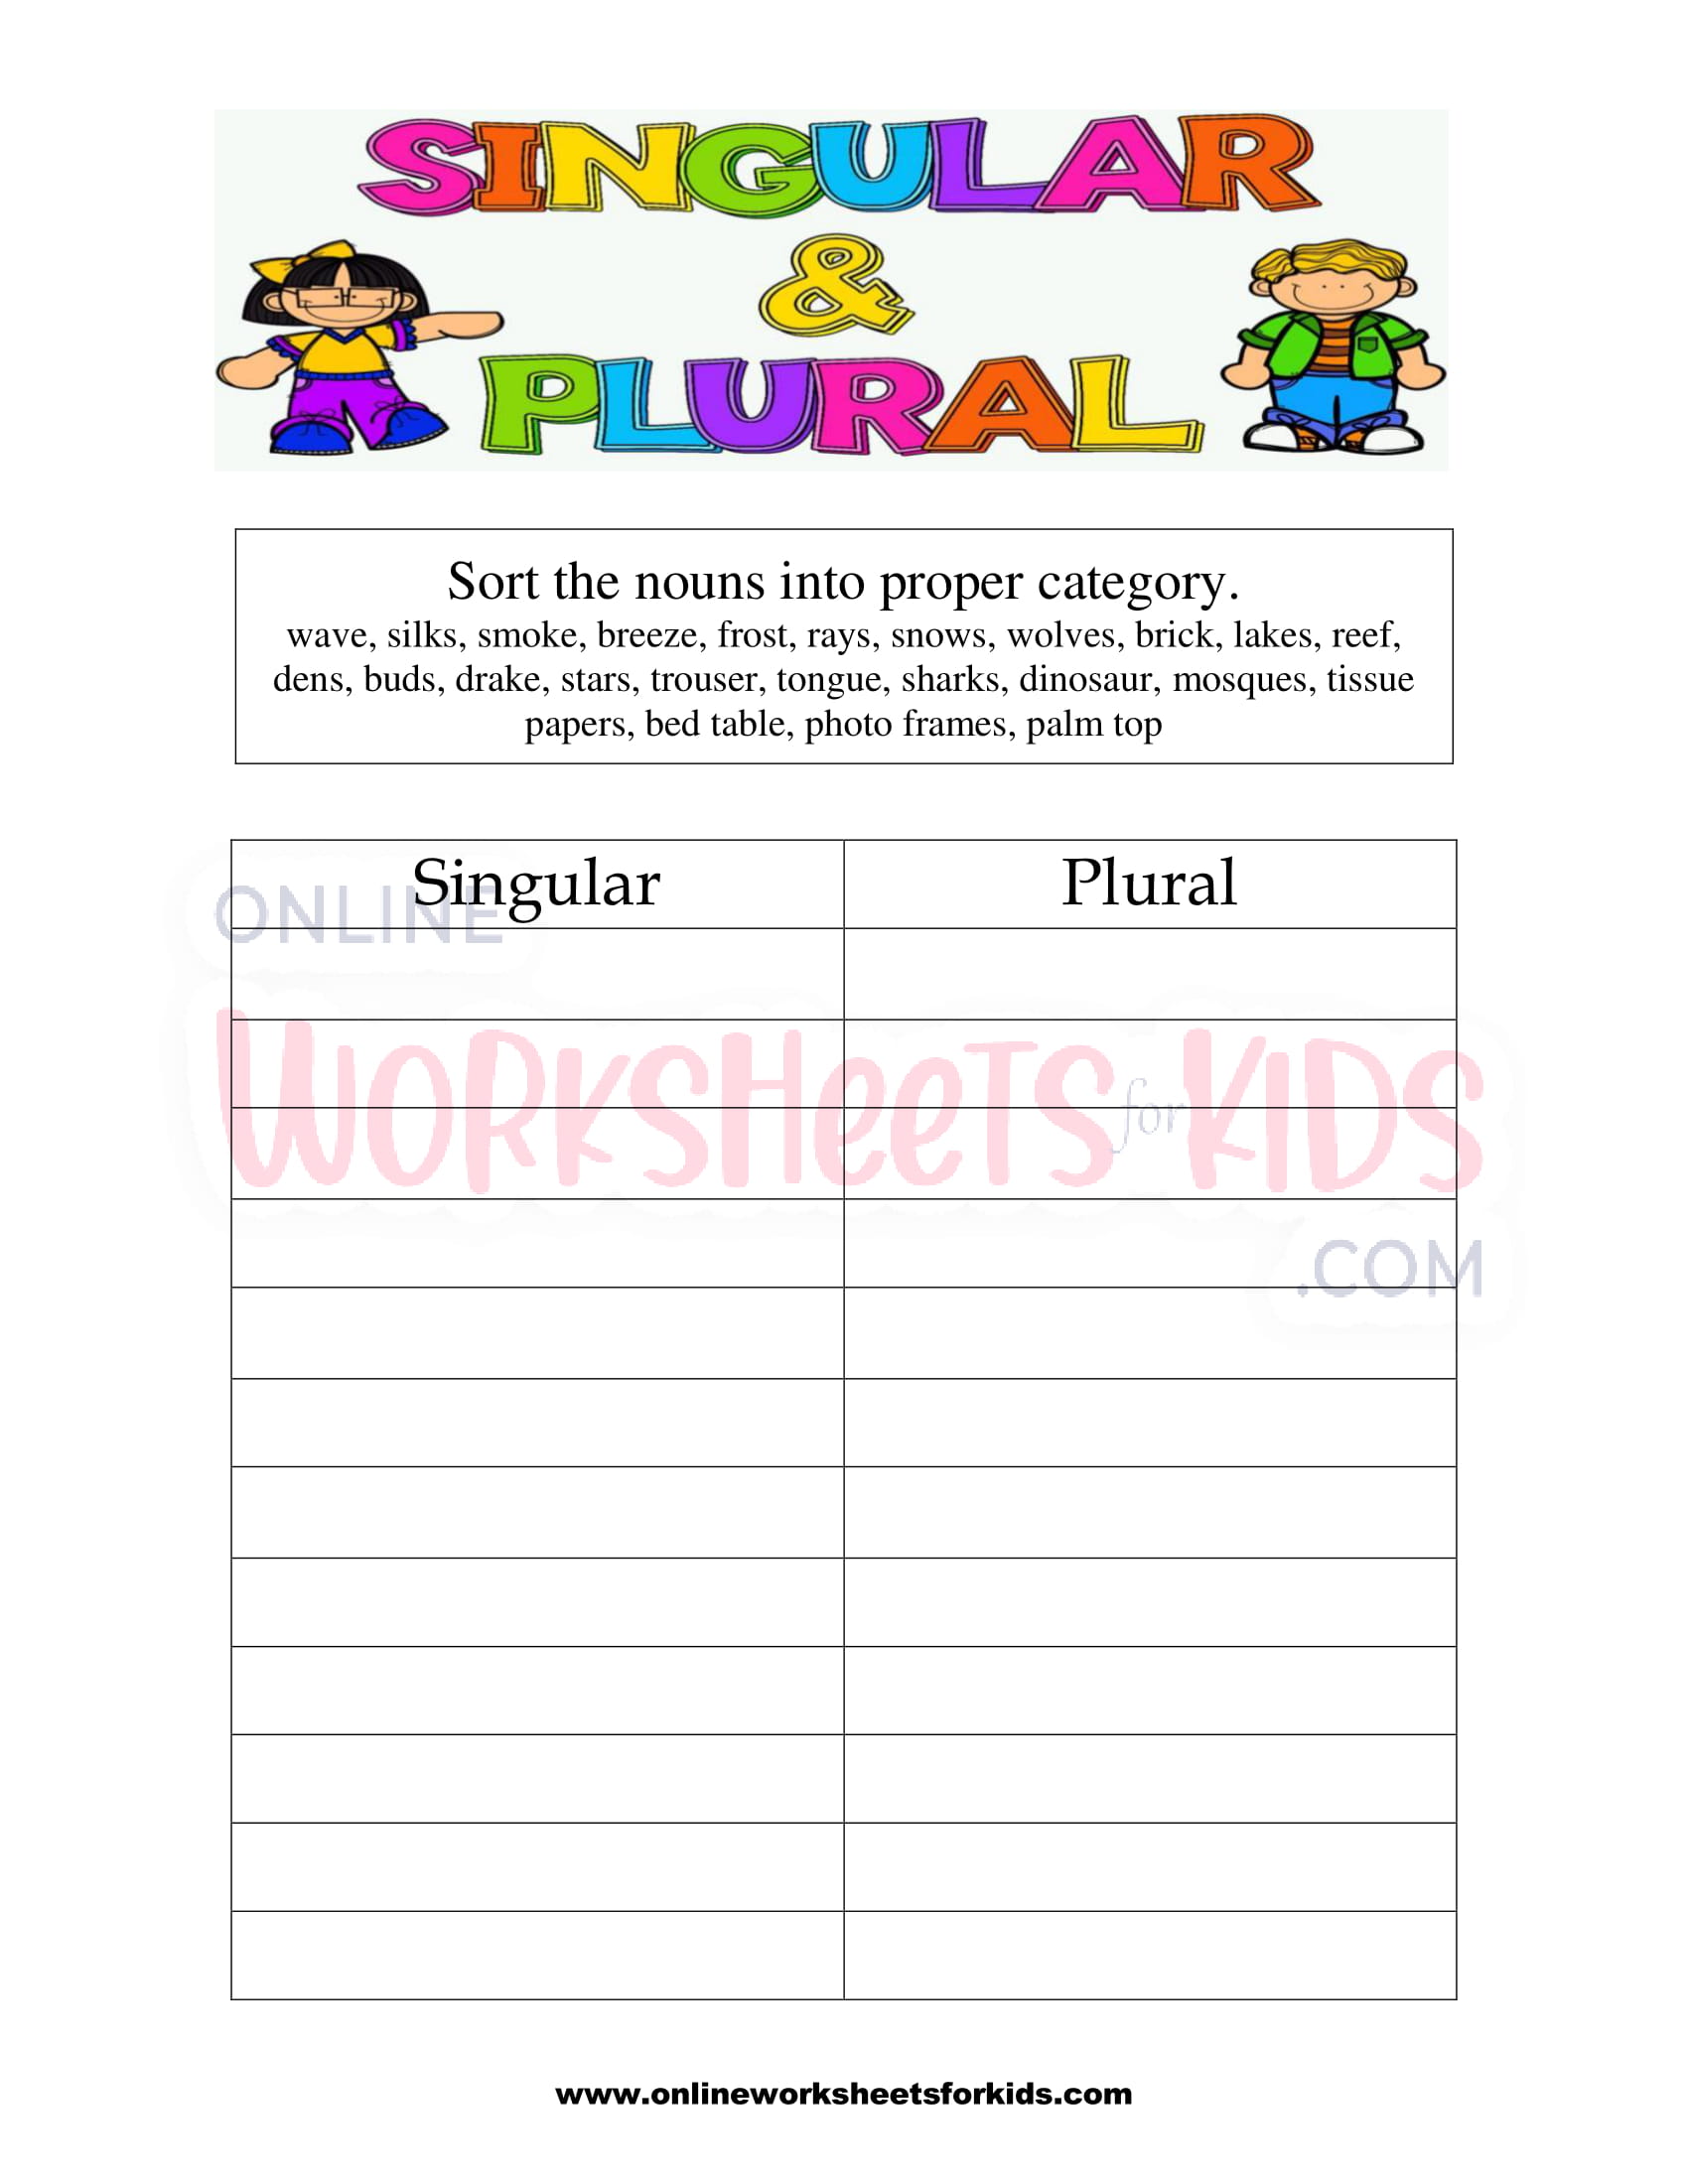 singular-and-plural-nouns-sorting-worksheet-10